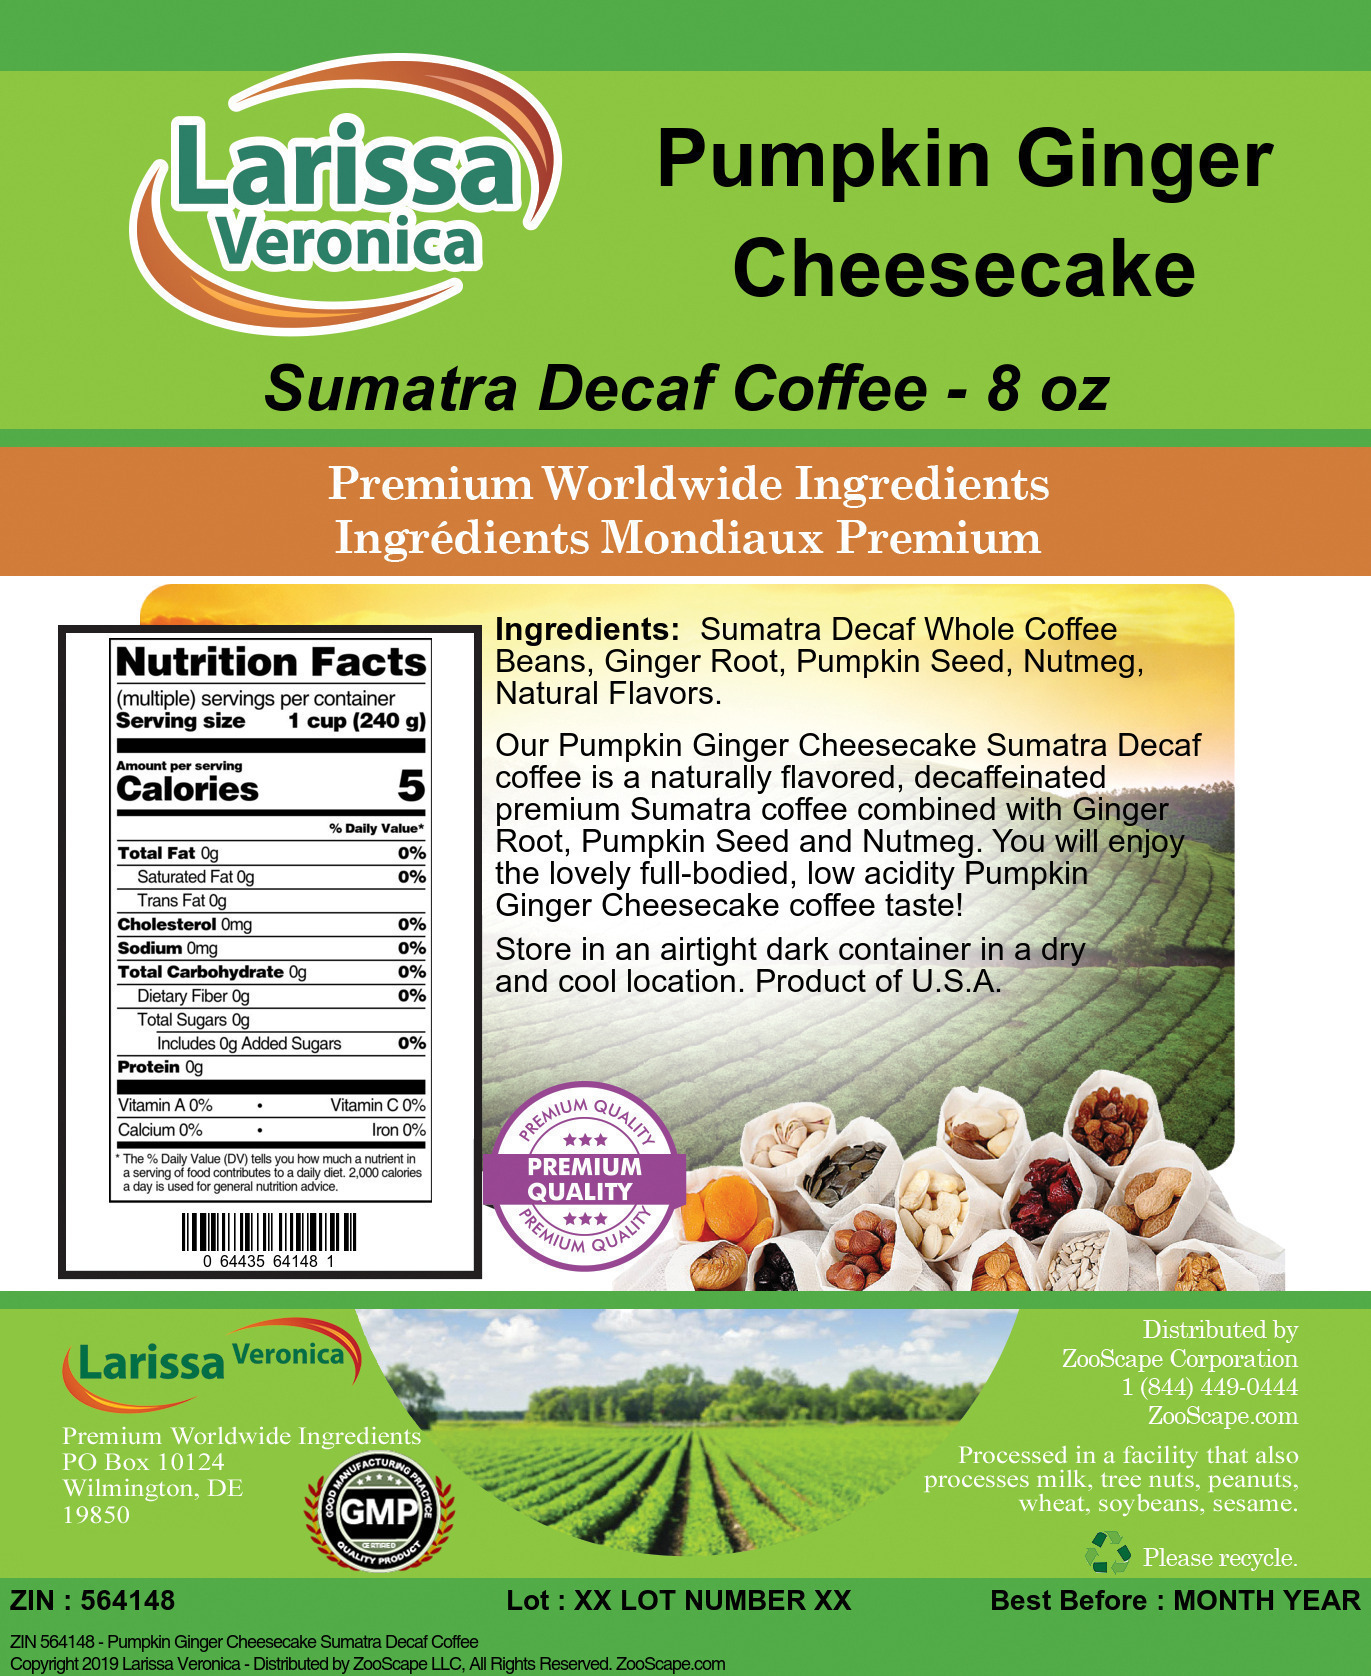 Pumpkin Ginger Cheesecake Sumatra Decaf Coffee - Label